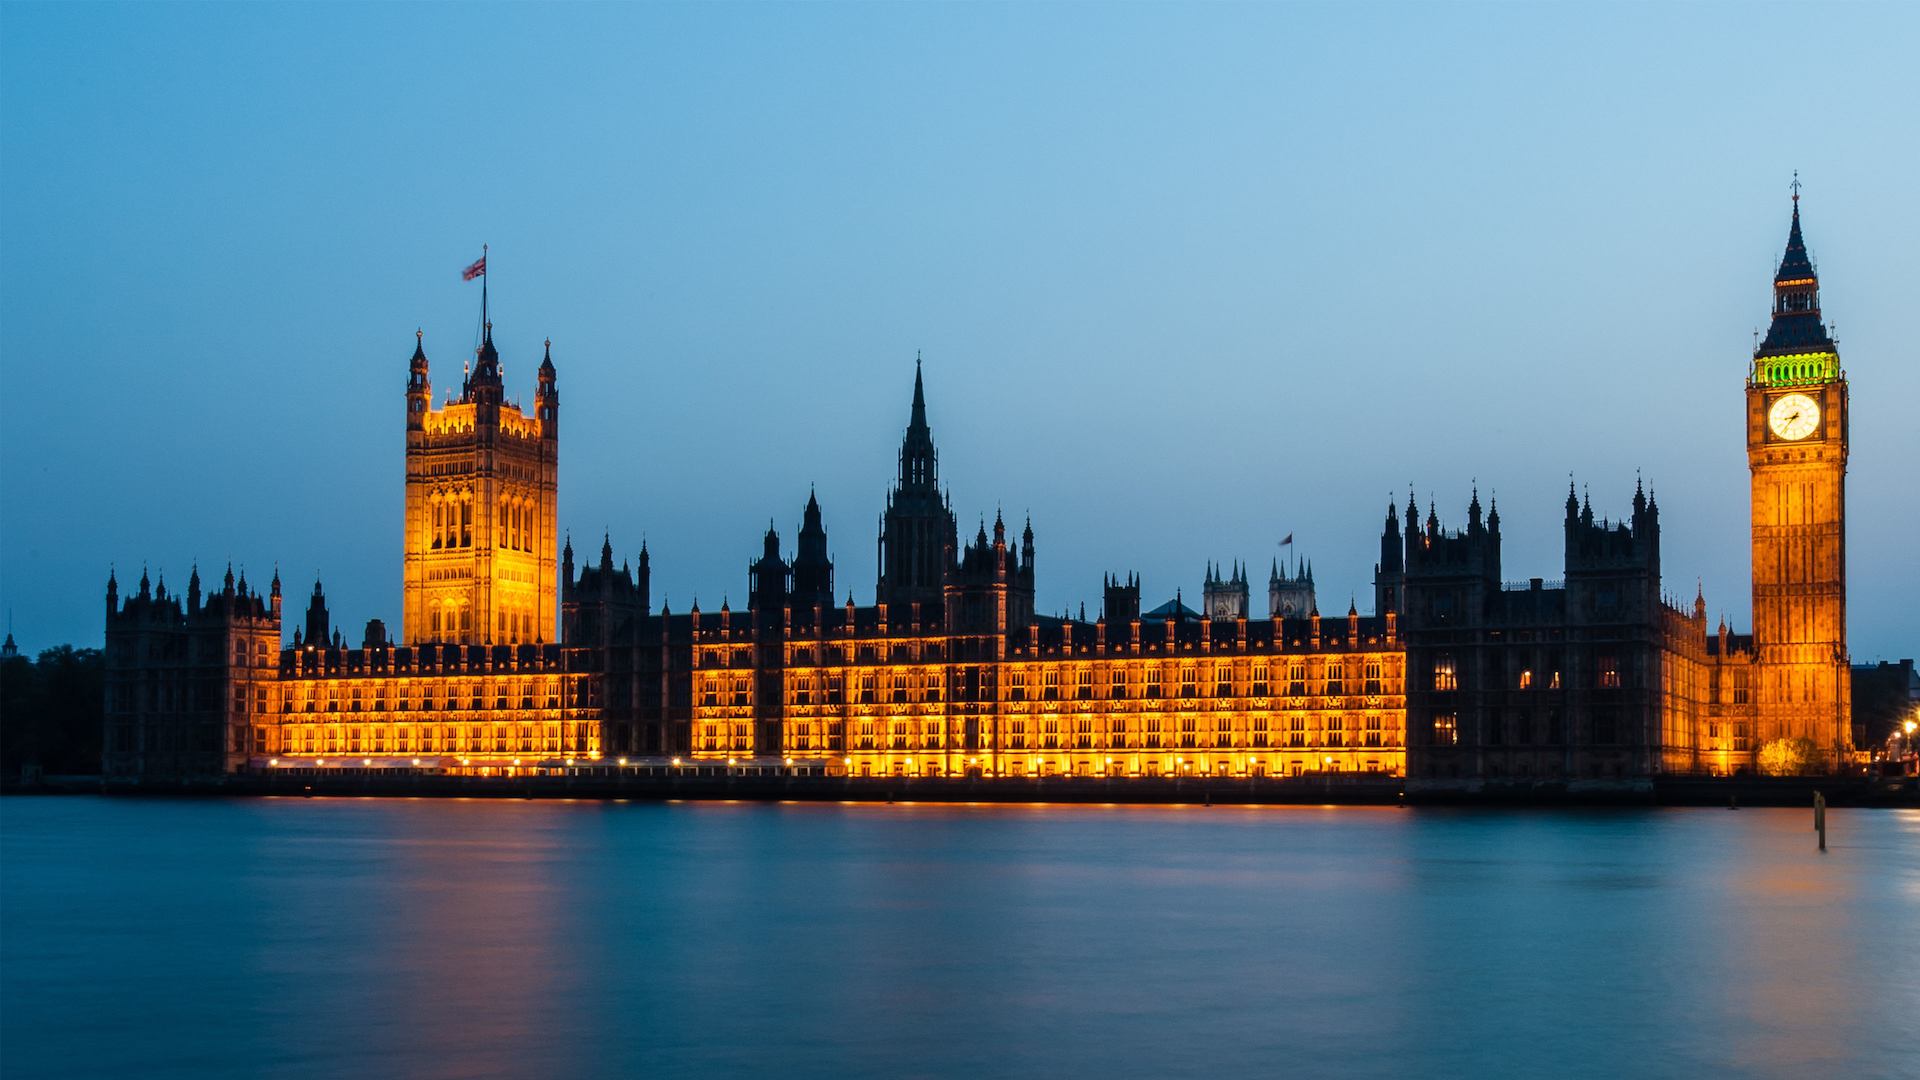 parliament at night